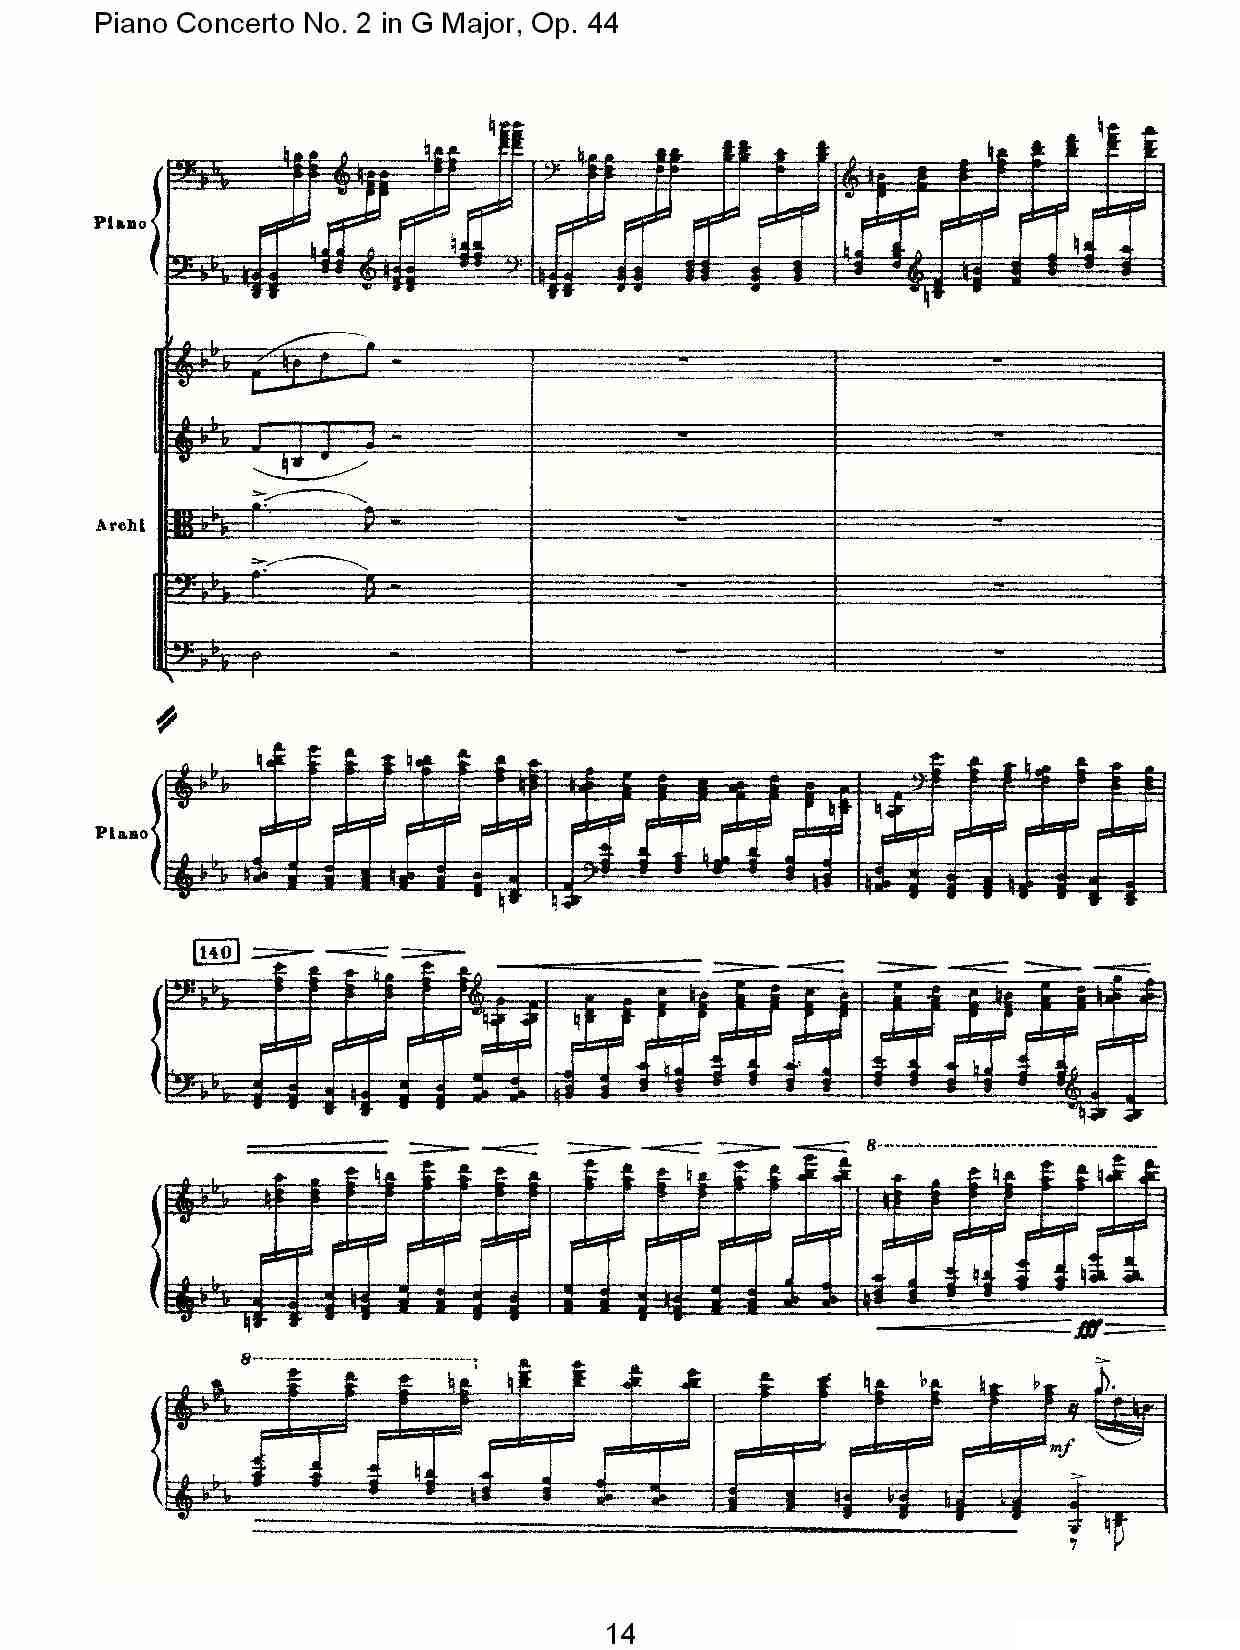 G大调第二钢琴协奏曲, Op.44第一乐章（一）钢琴曲谱（图14）